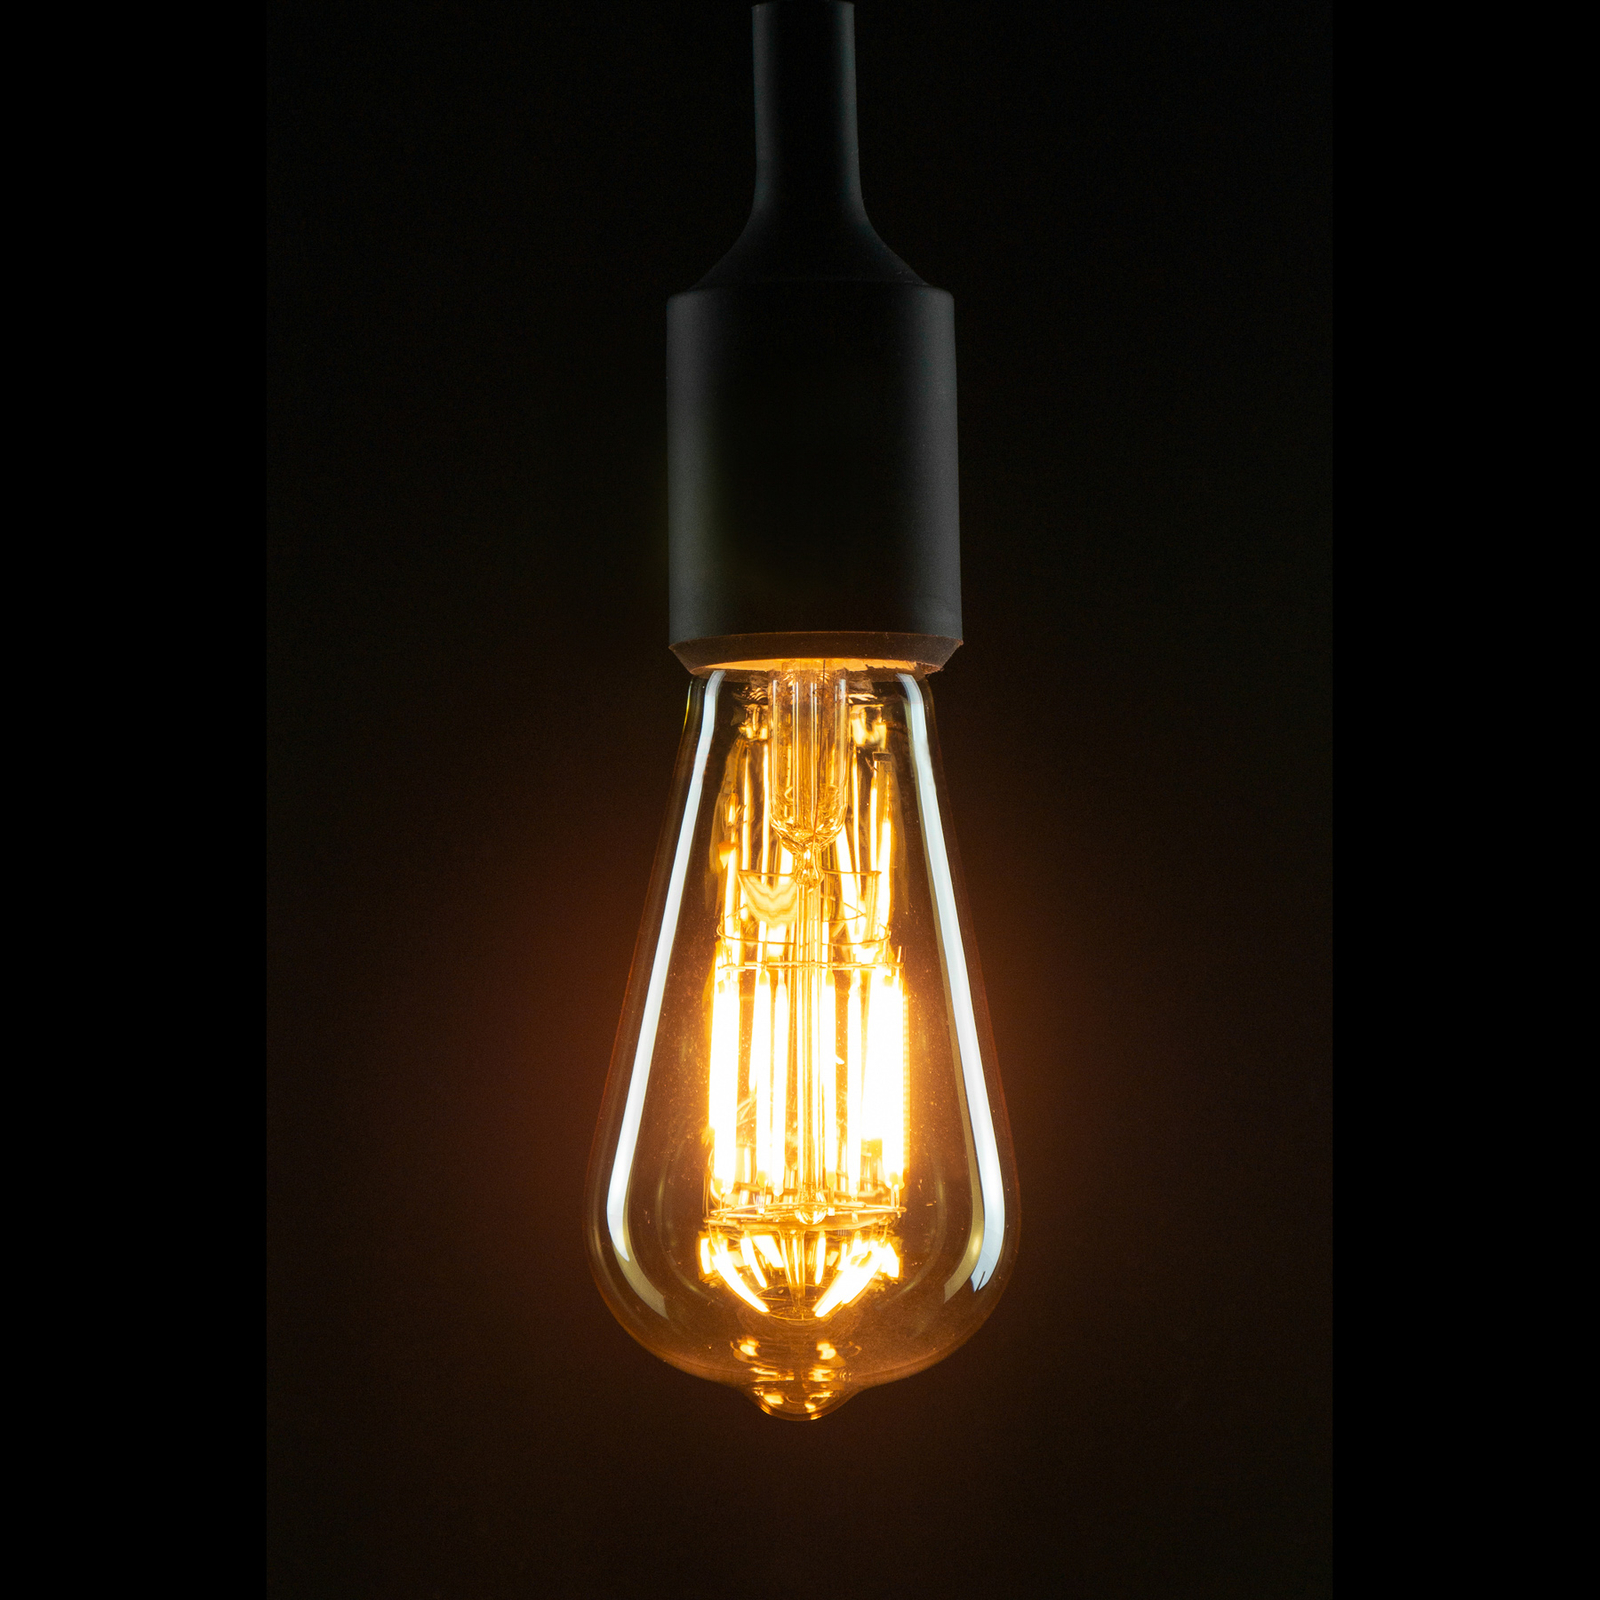 SEGULA LED-Lampe E27 ST64 5W 2200K gold/silber dim